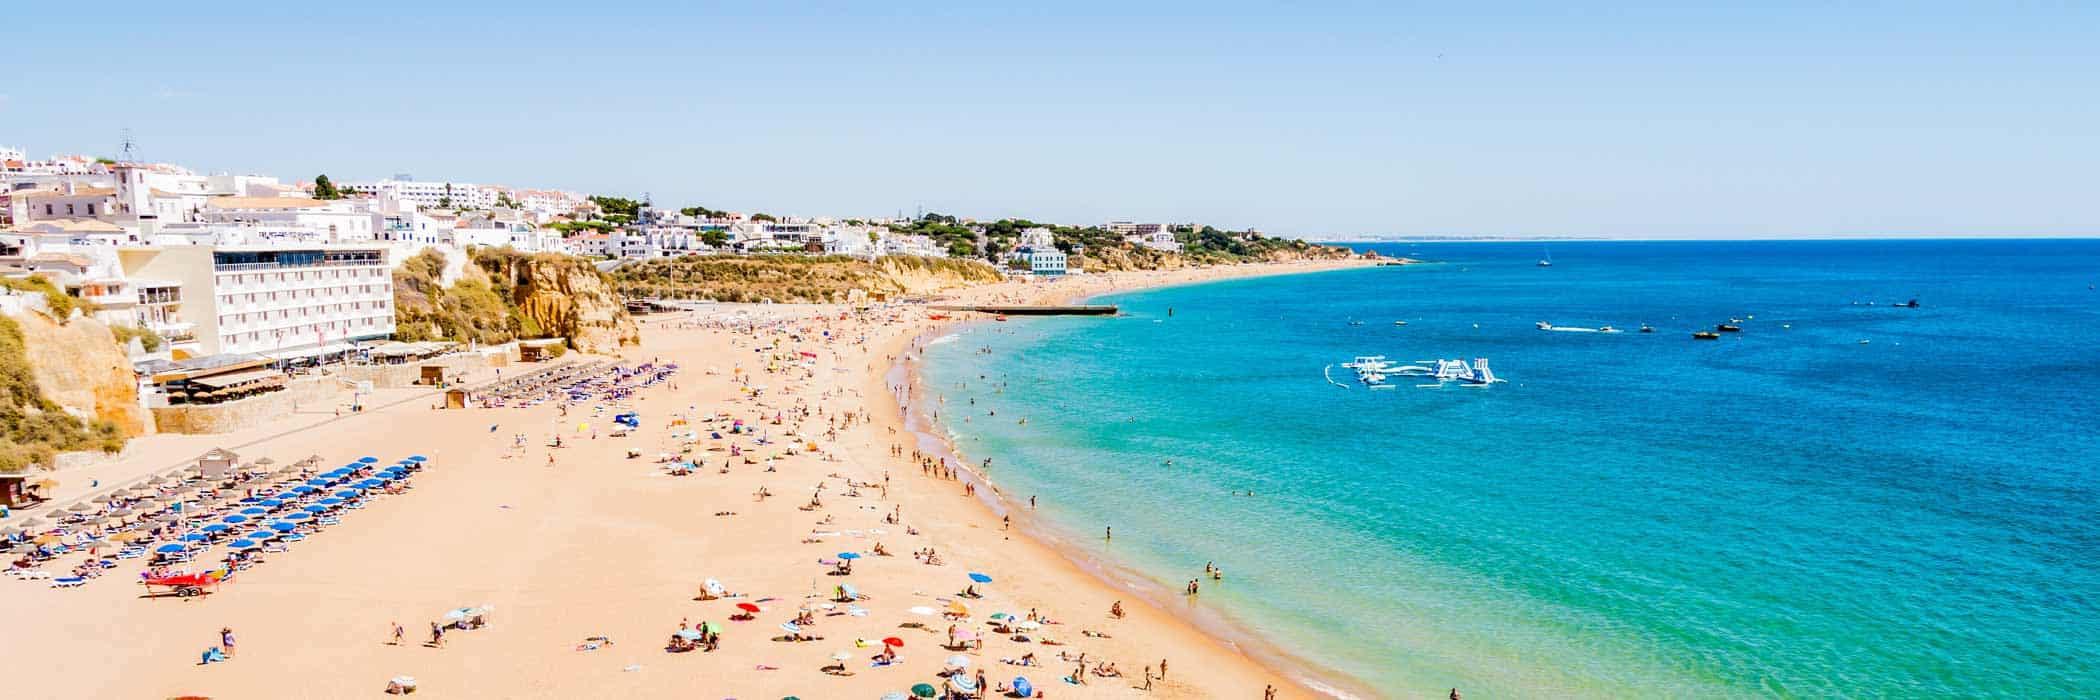 Algarve Beach - TUI Holidays